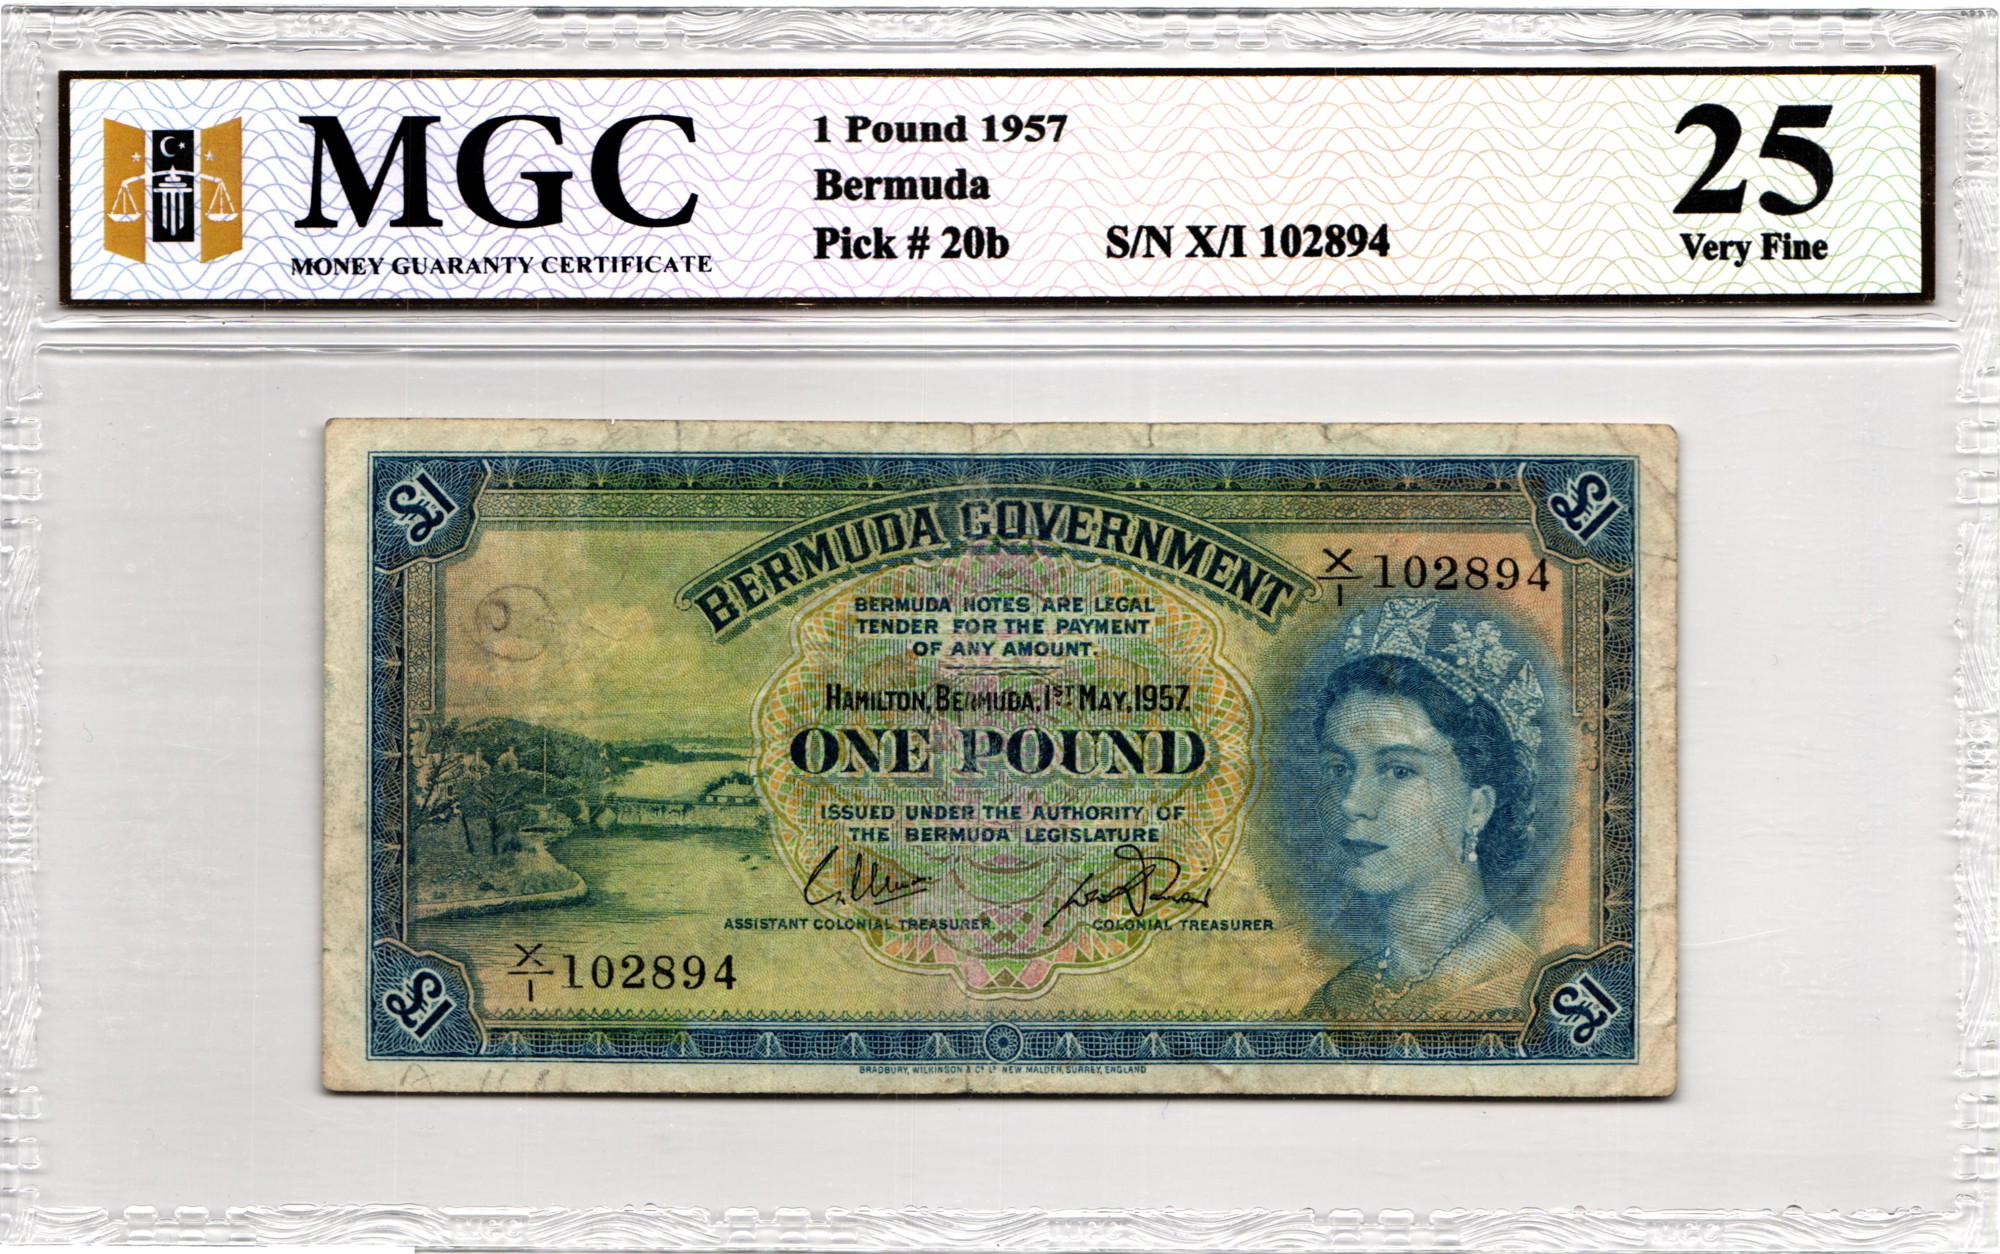 Bermuda 1 Pound 1957 MGC 25 Very Fine | Katz Auction